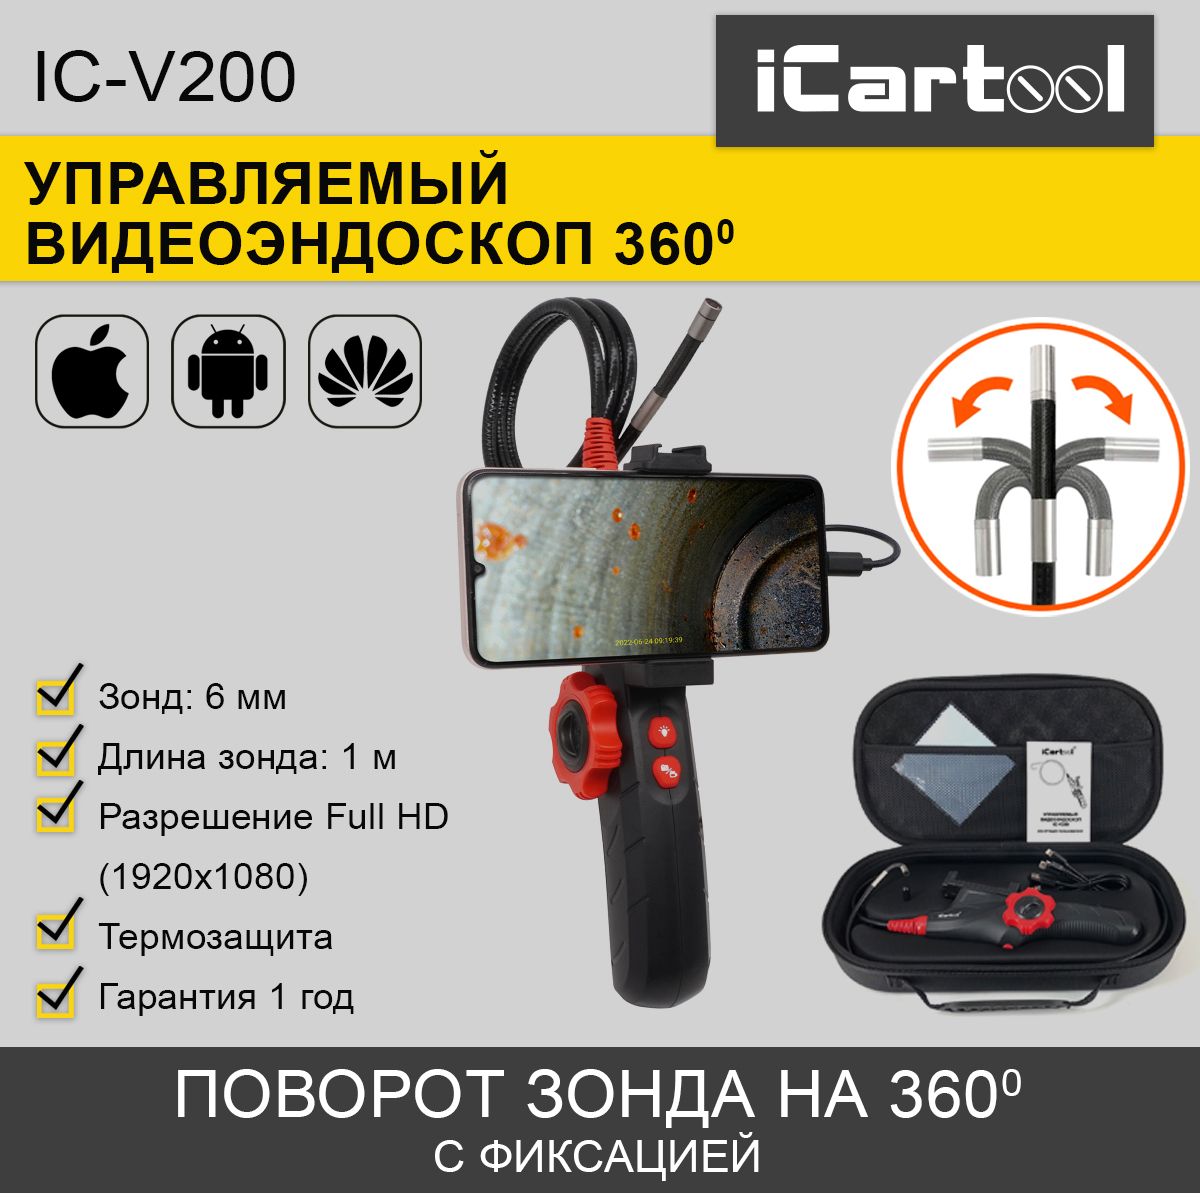 Видеоэндоскоп управляемый iCartool IC-V200 USB, 2Мп, 1920x1080, 1м, 6мм, 360 icartool видеоэндоскоп управляемый usb 2мп 1920x1080 1м 6мм 360 ic v200